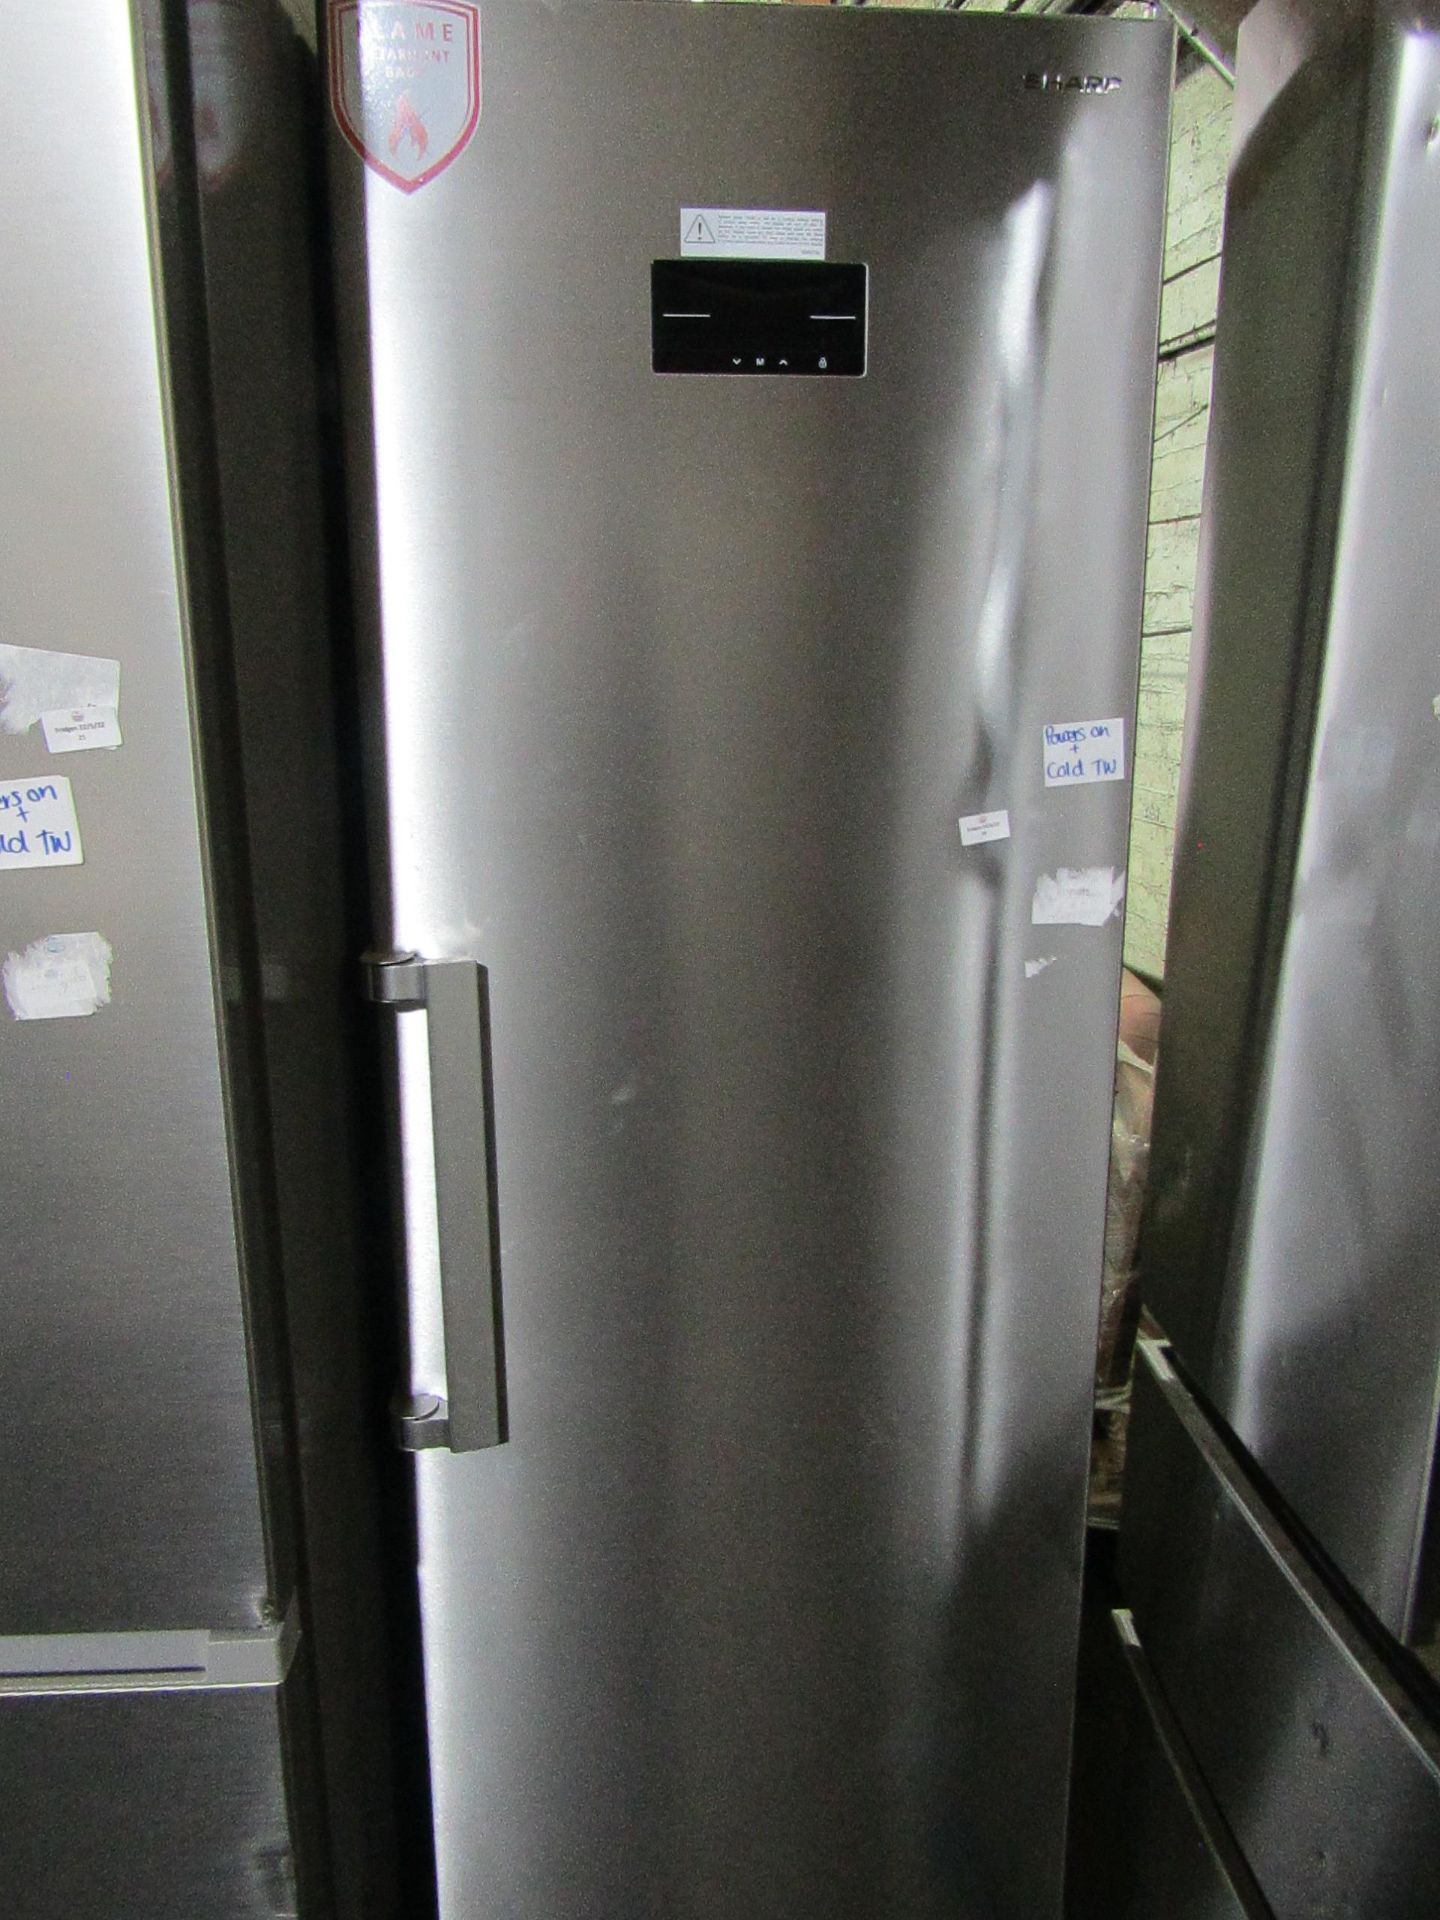 Sharp tall freestanding fridge, Clean Inside Marks Present On Bottom. - Powers On & Gets Cold.